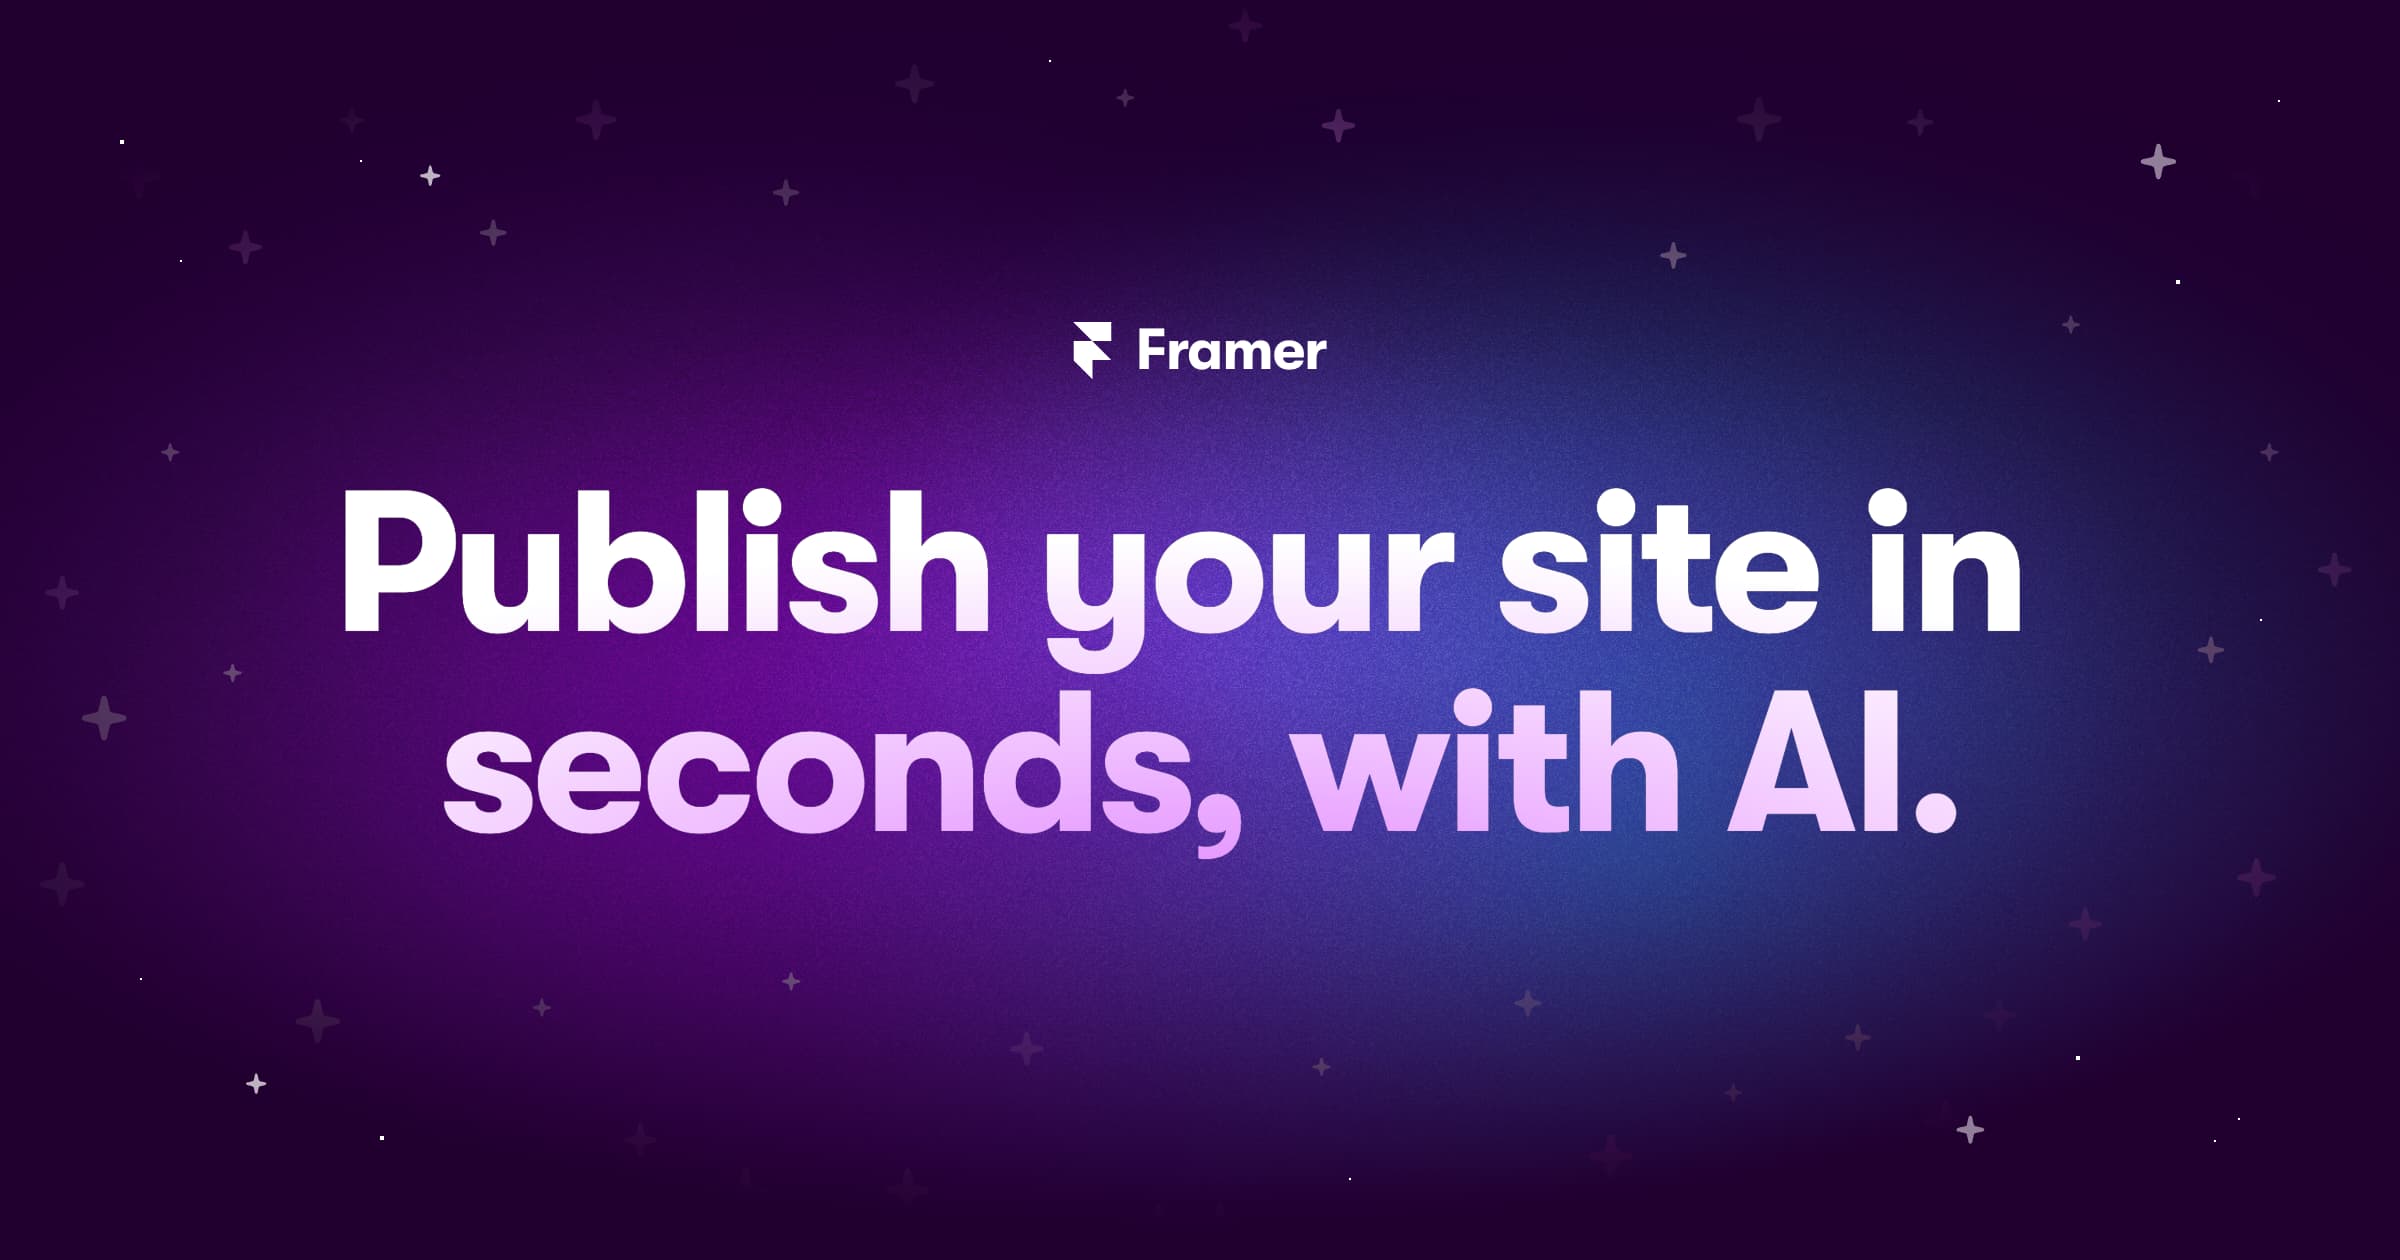 Framer AI - A platform to create and publish websites